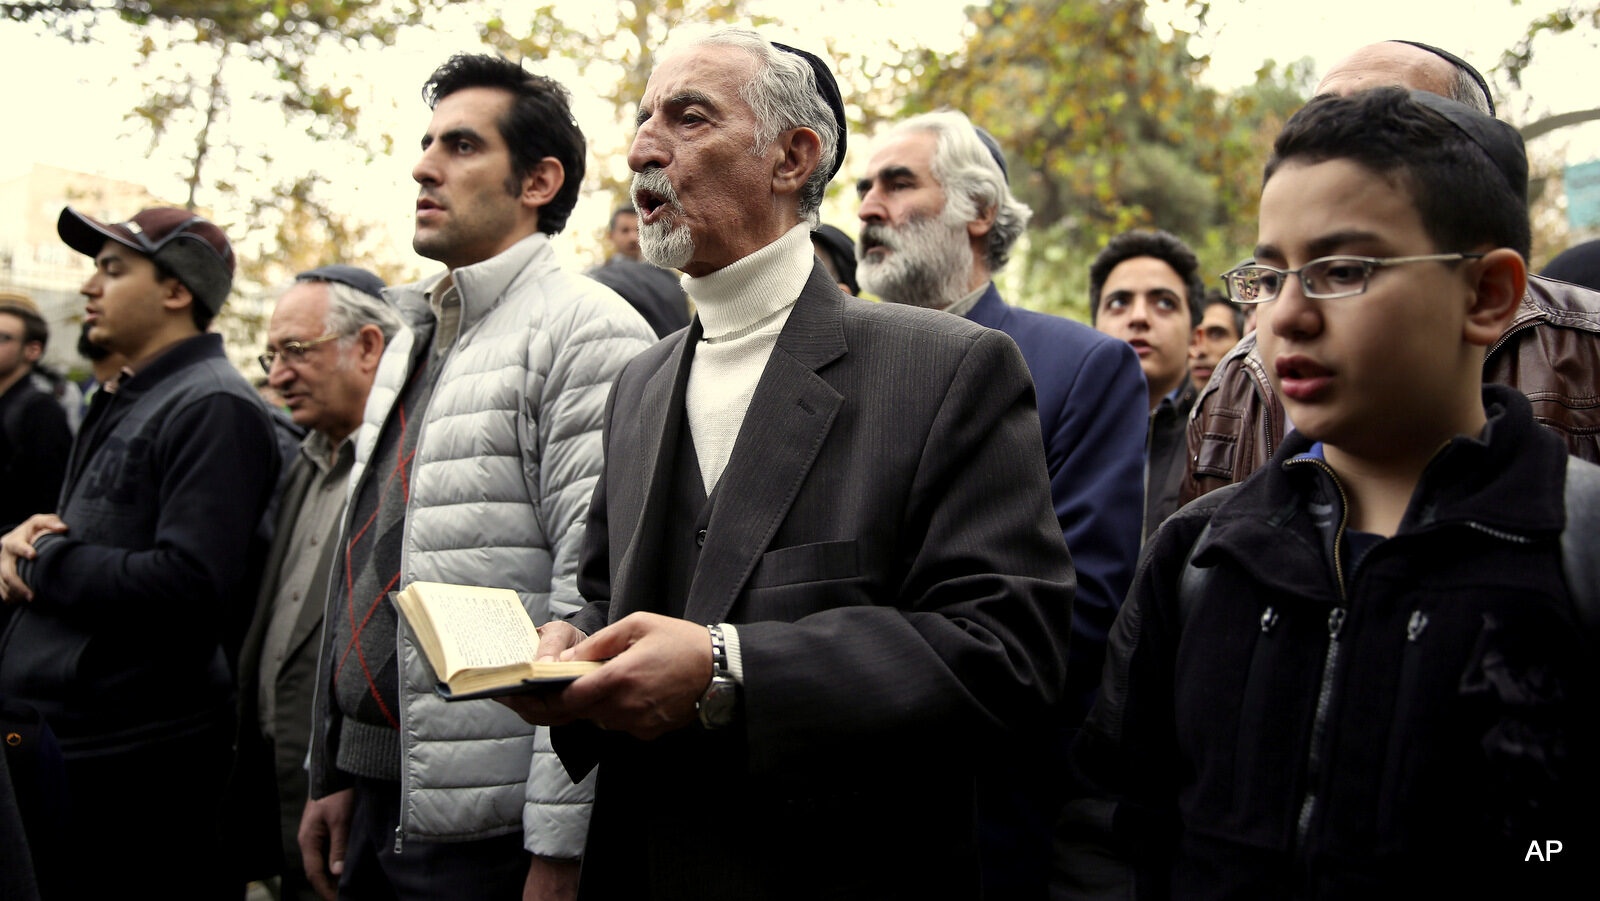 Iranian Jews pray in Hebrew during a gathering of Iran's Jewish community